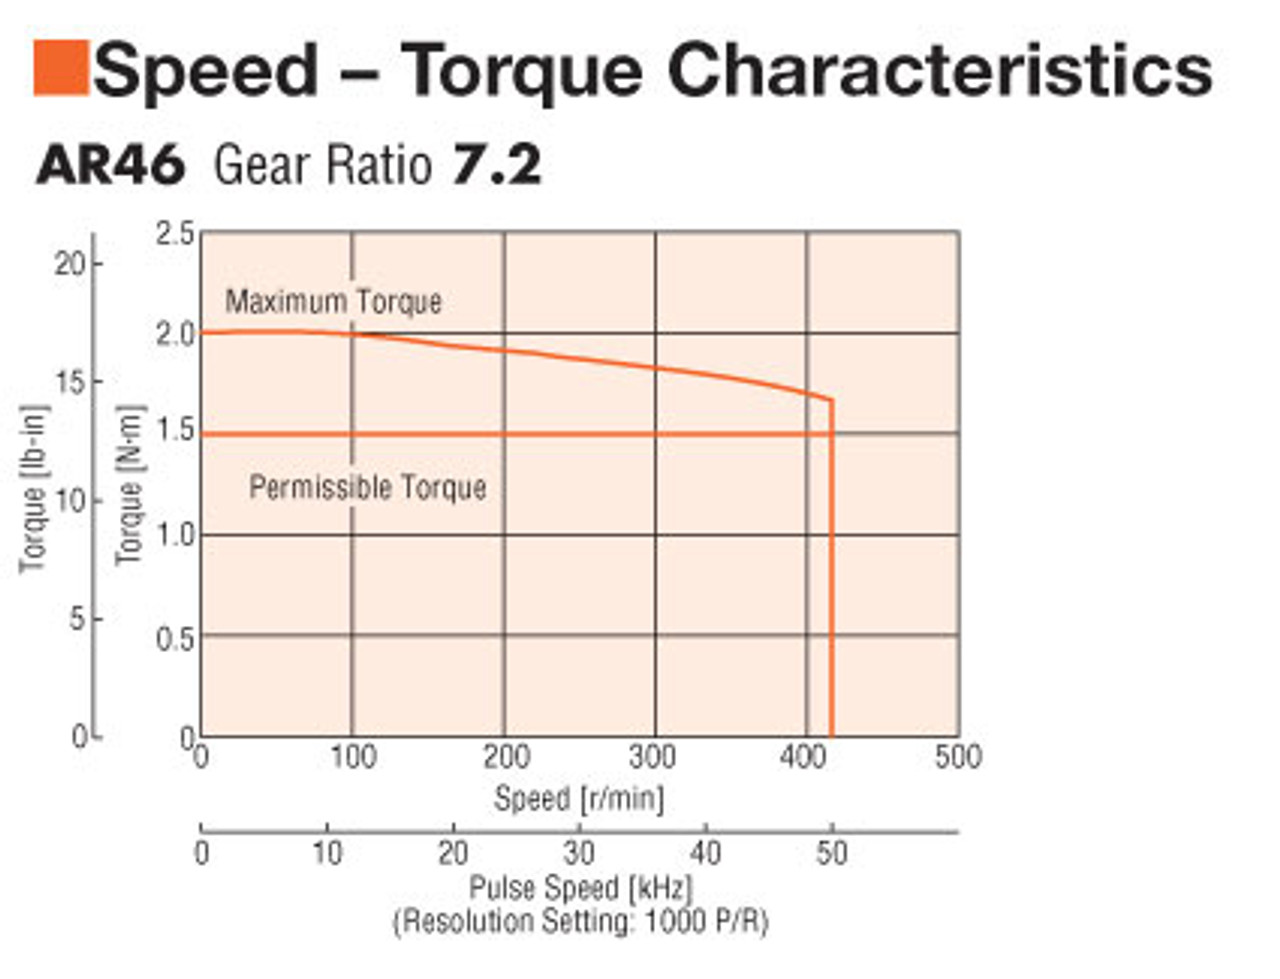 AR46MAD-N7.2-3 - Speed-Torque